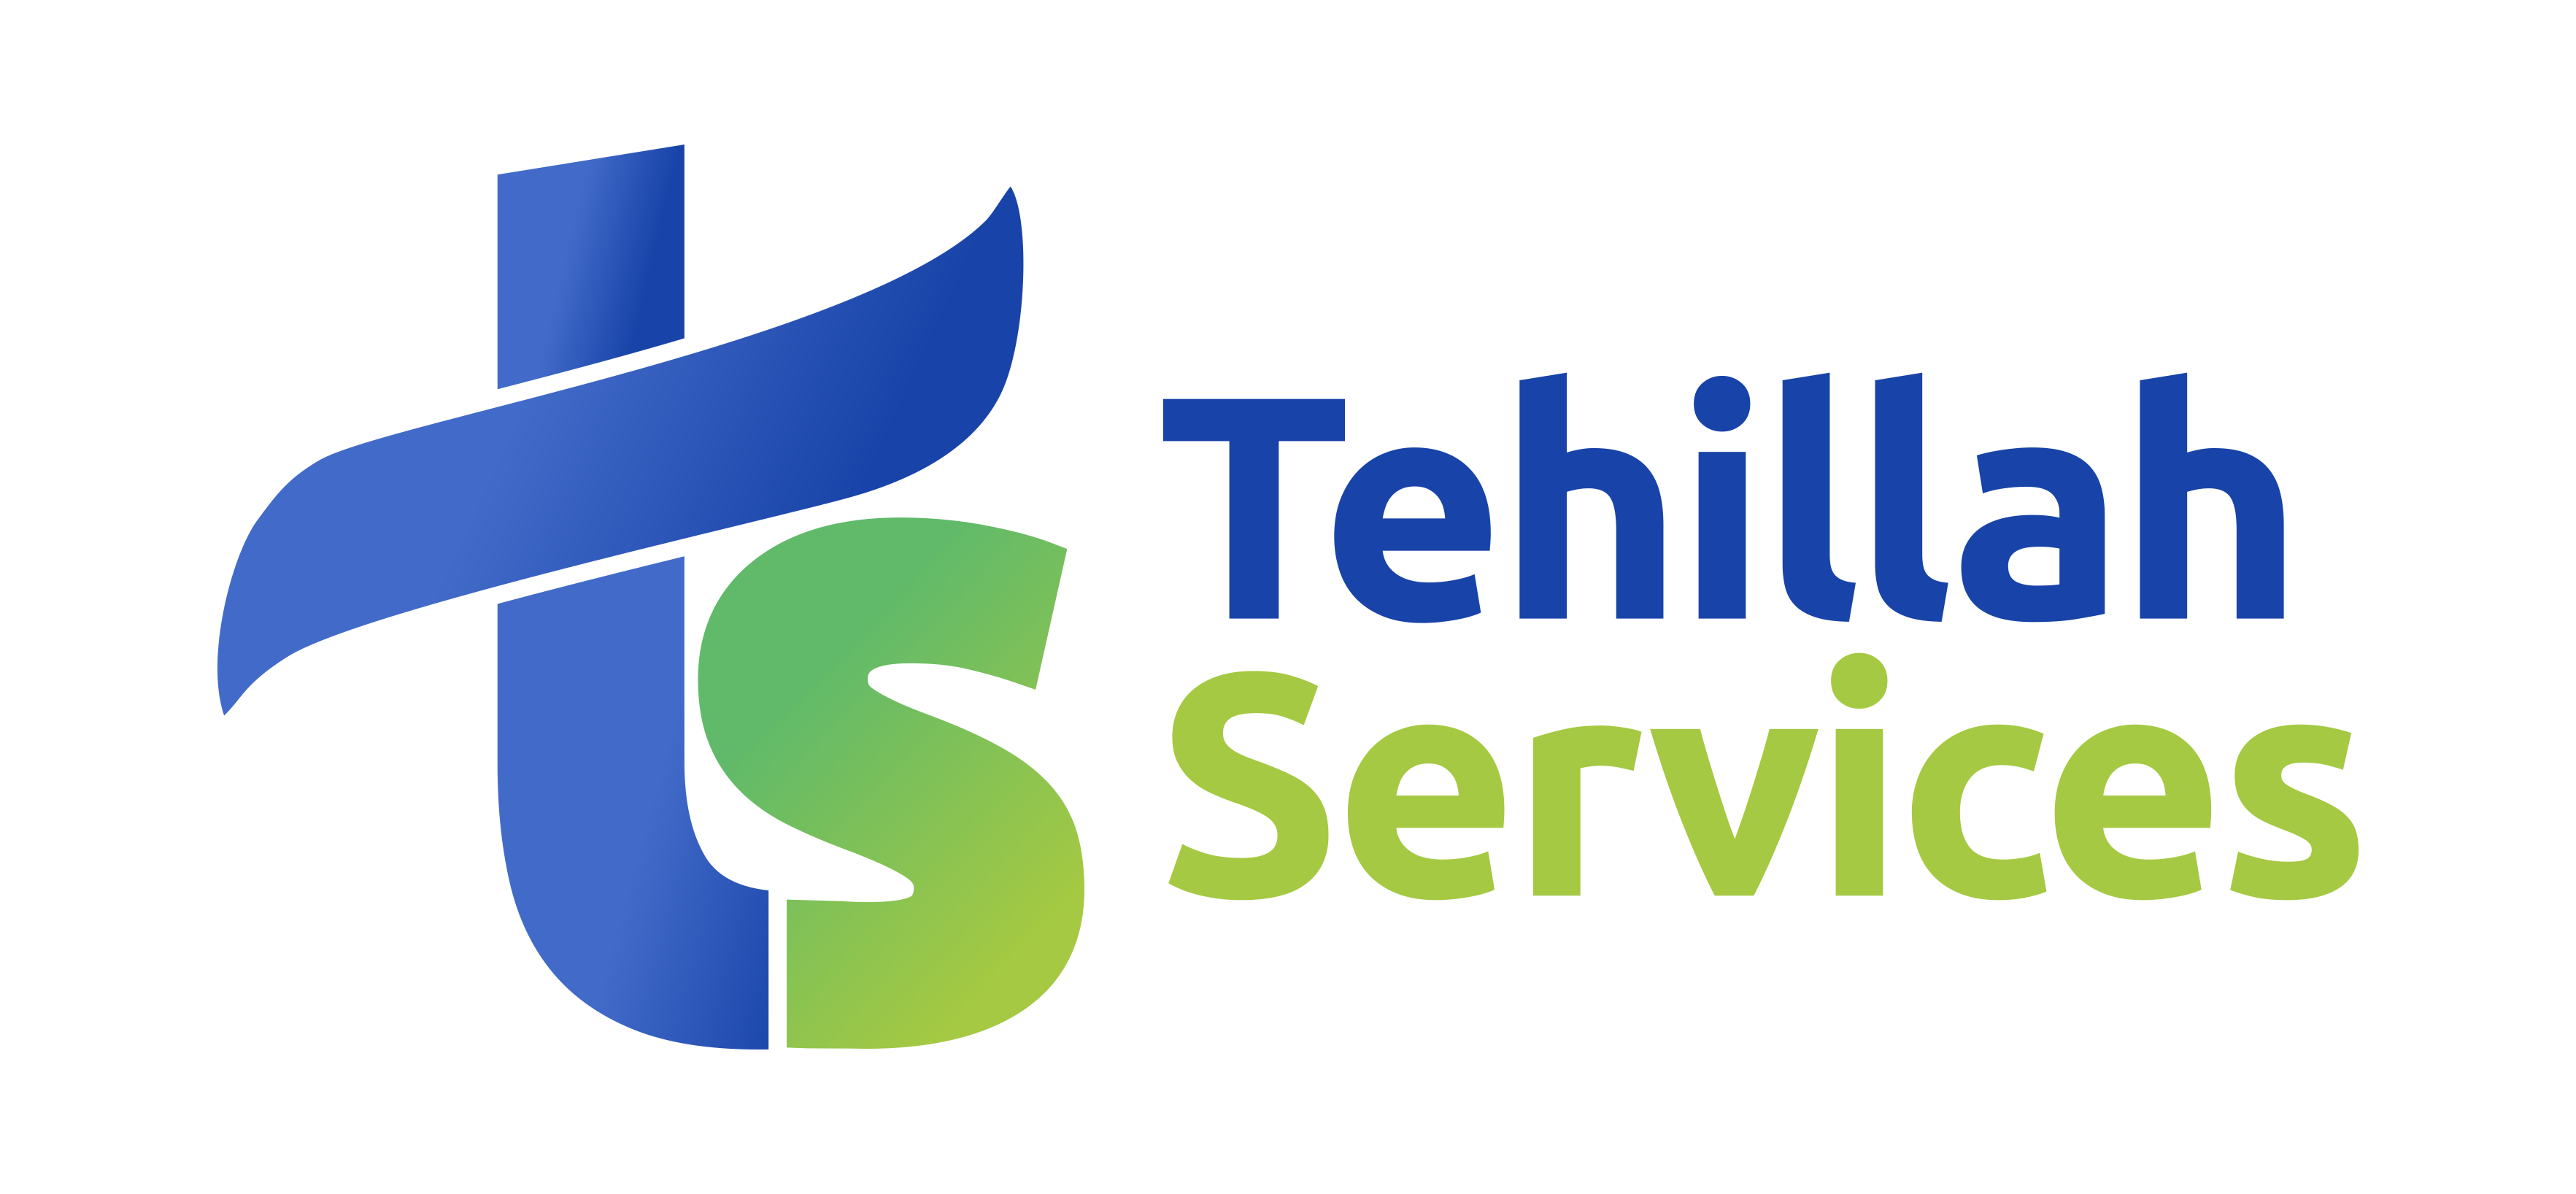 TEHILLAH SERVICES